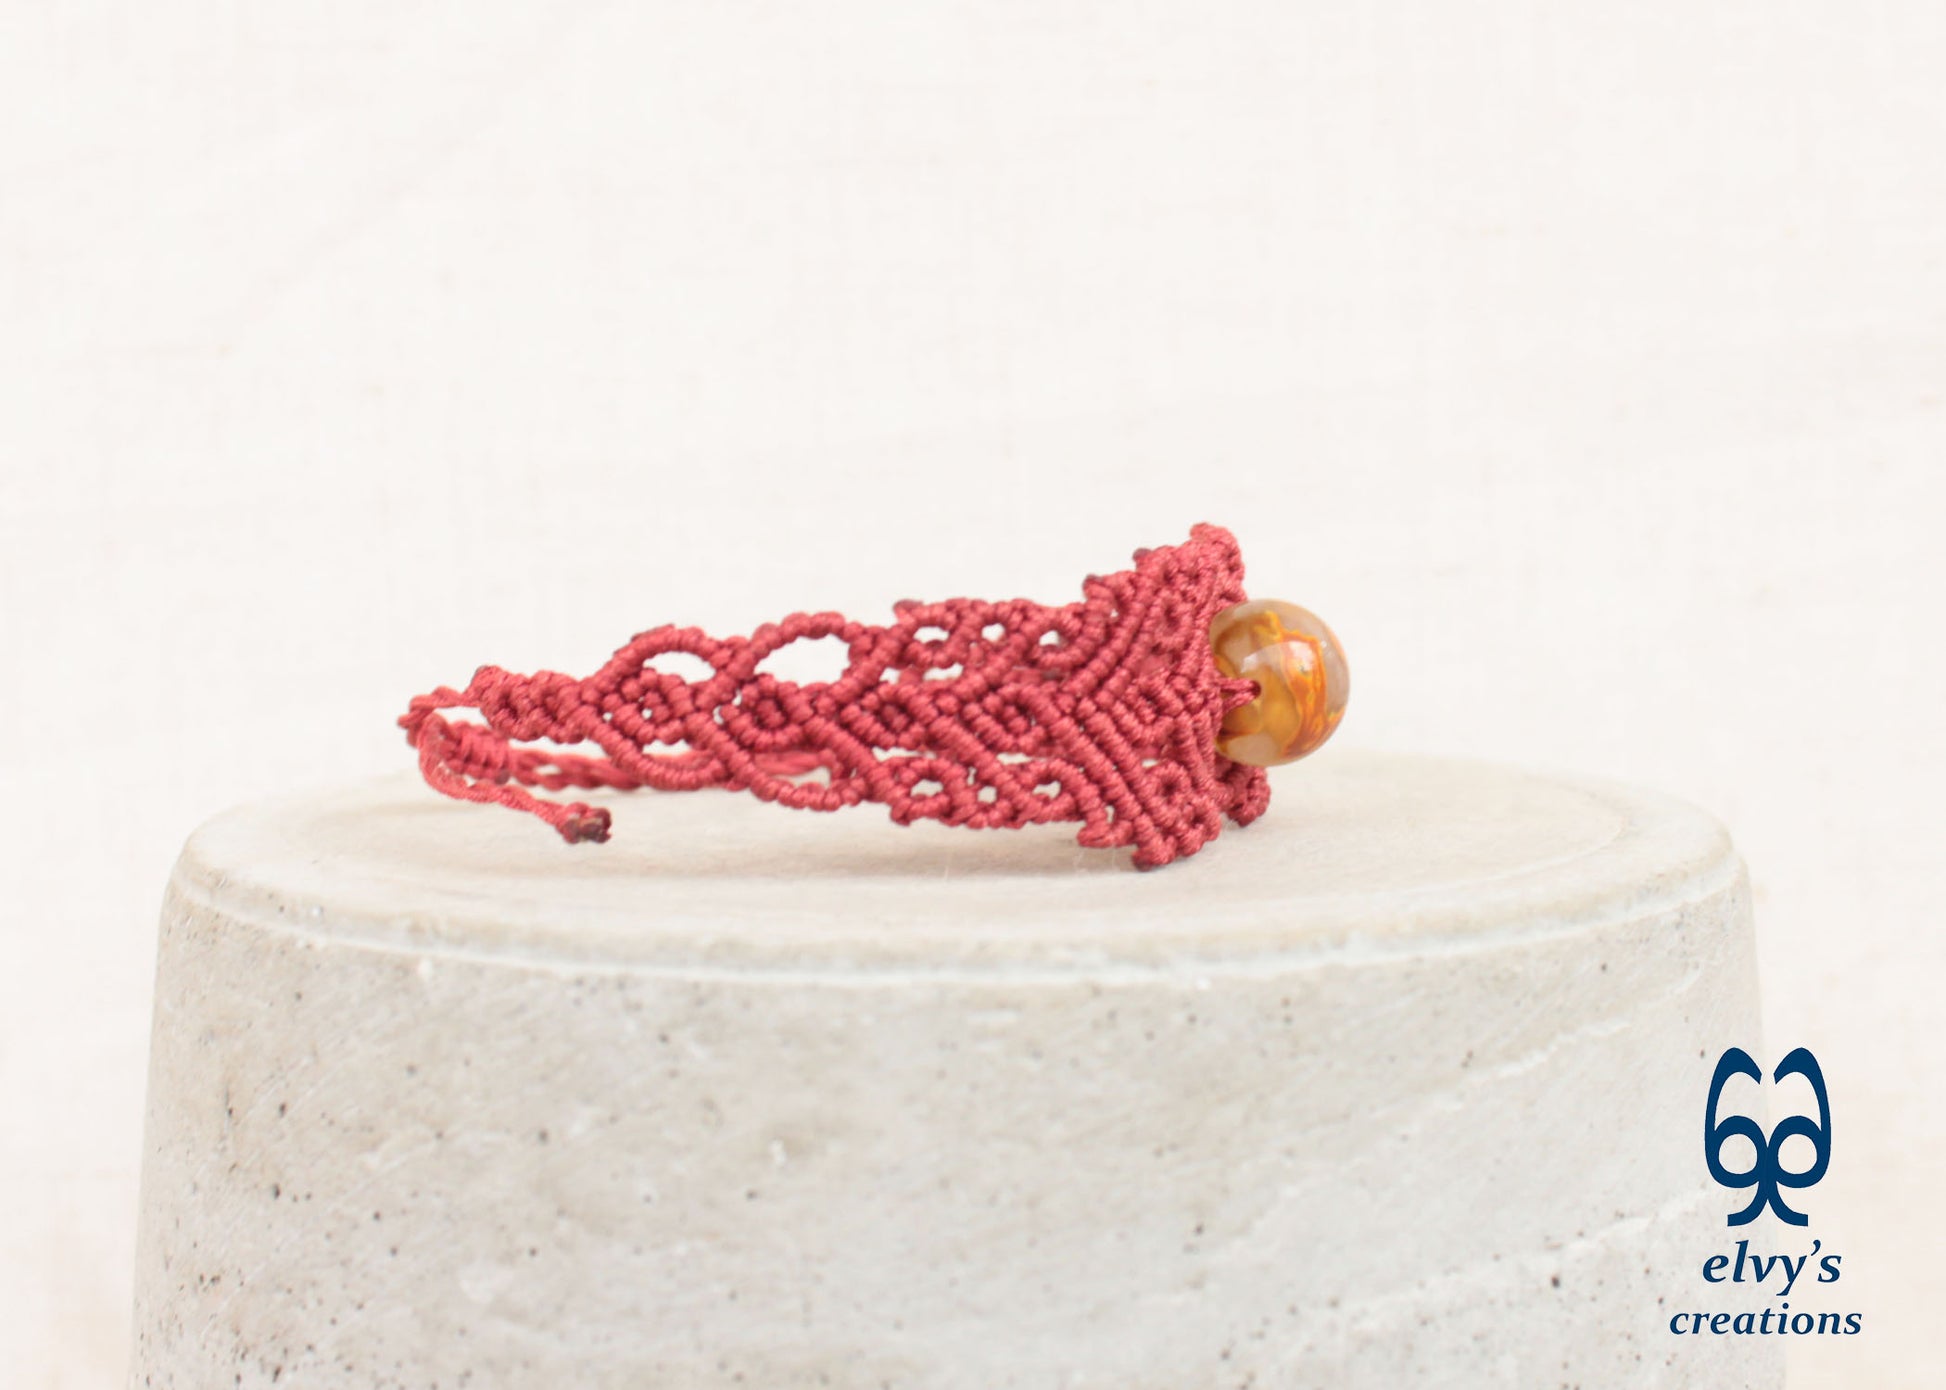 Red Macrame Bracelet with Crystal Quartz Gemstone, Handmade Unique Birthday Gift for Women